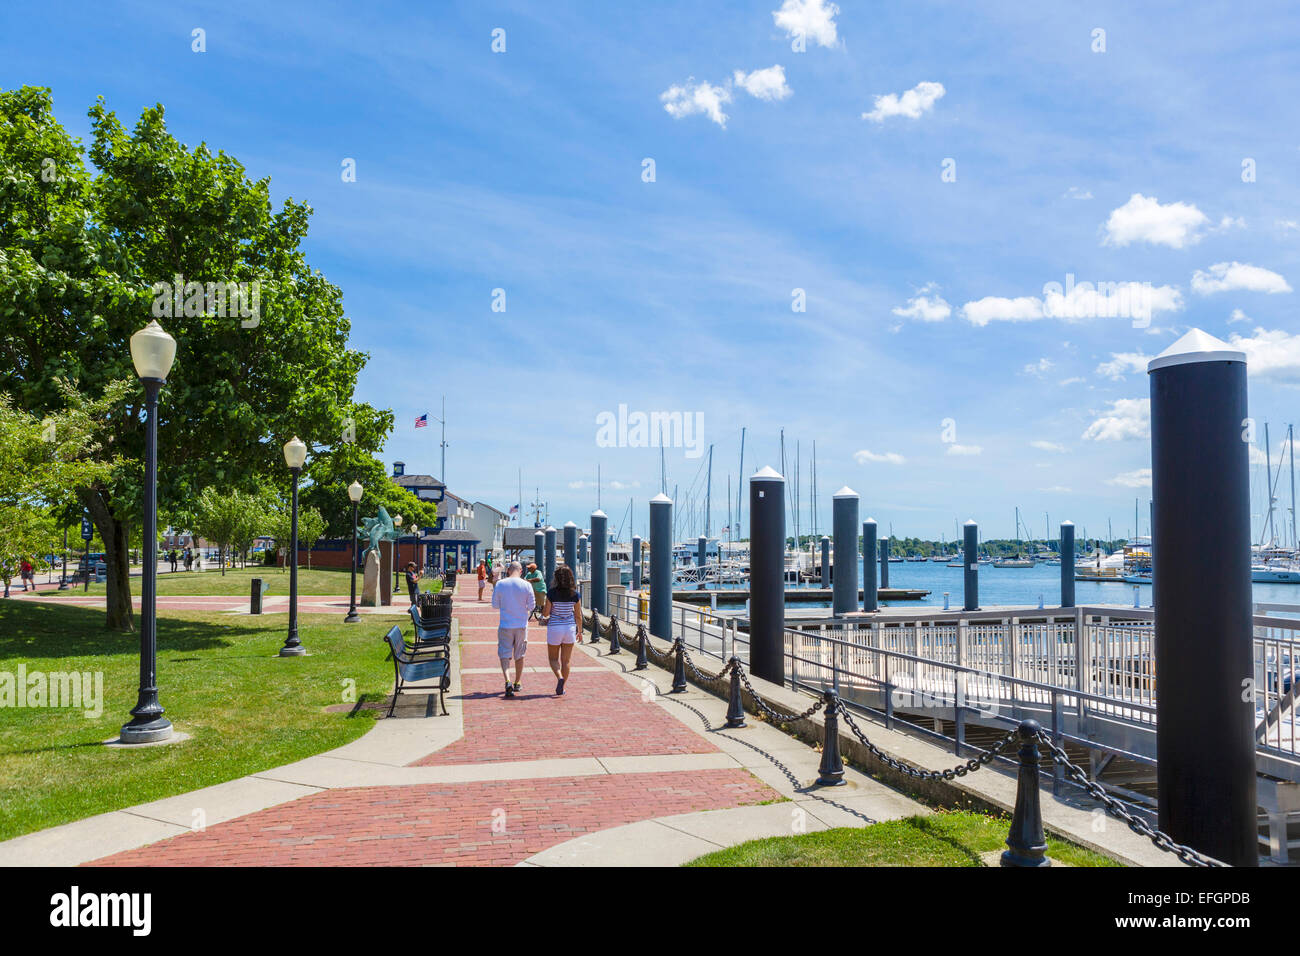 Promenade in Perrotti Park by the harbor and marina, Newport, Rhode Island, USA Stock Photo